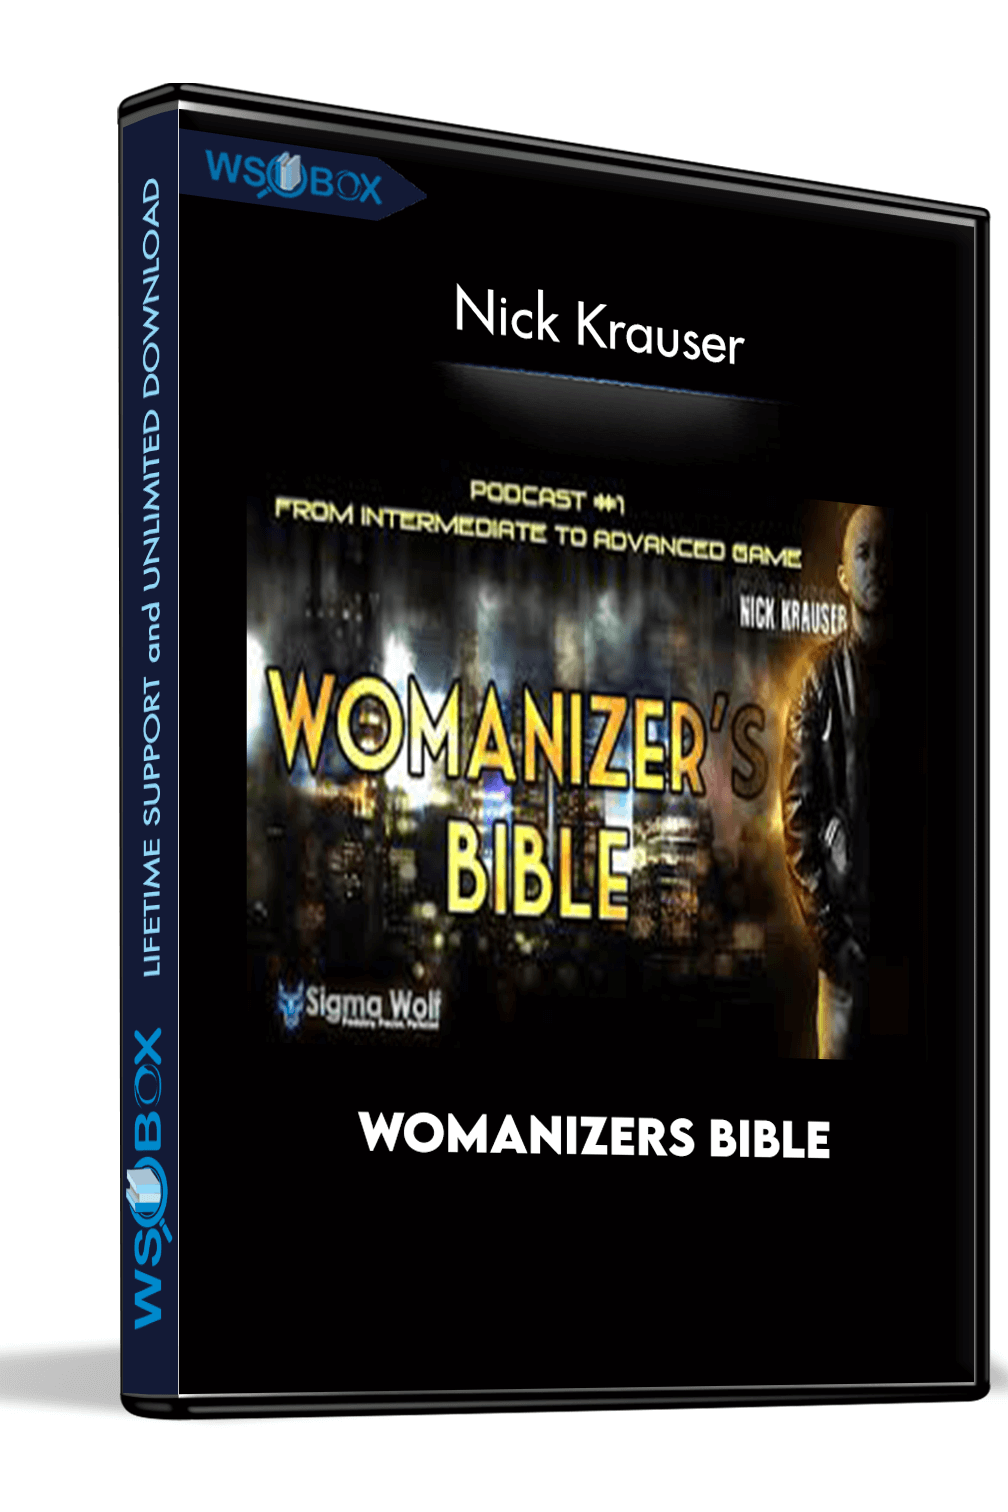 womanizers-bible-nick-krauser